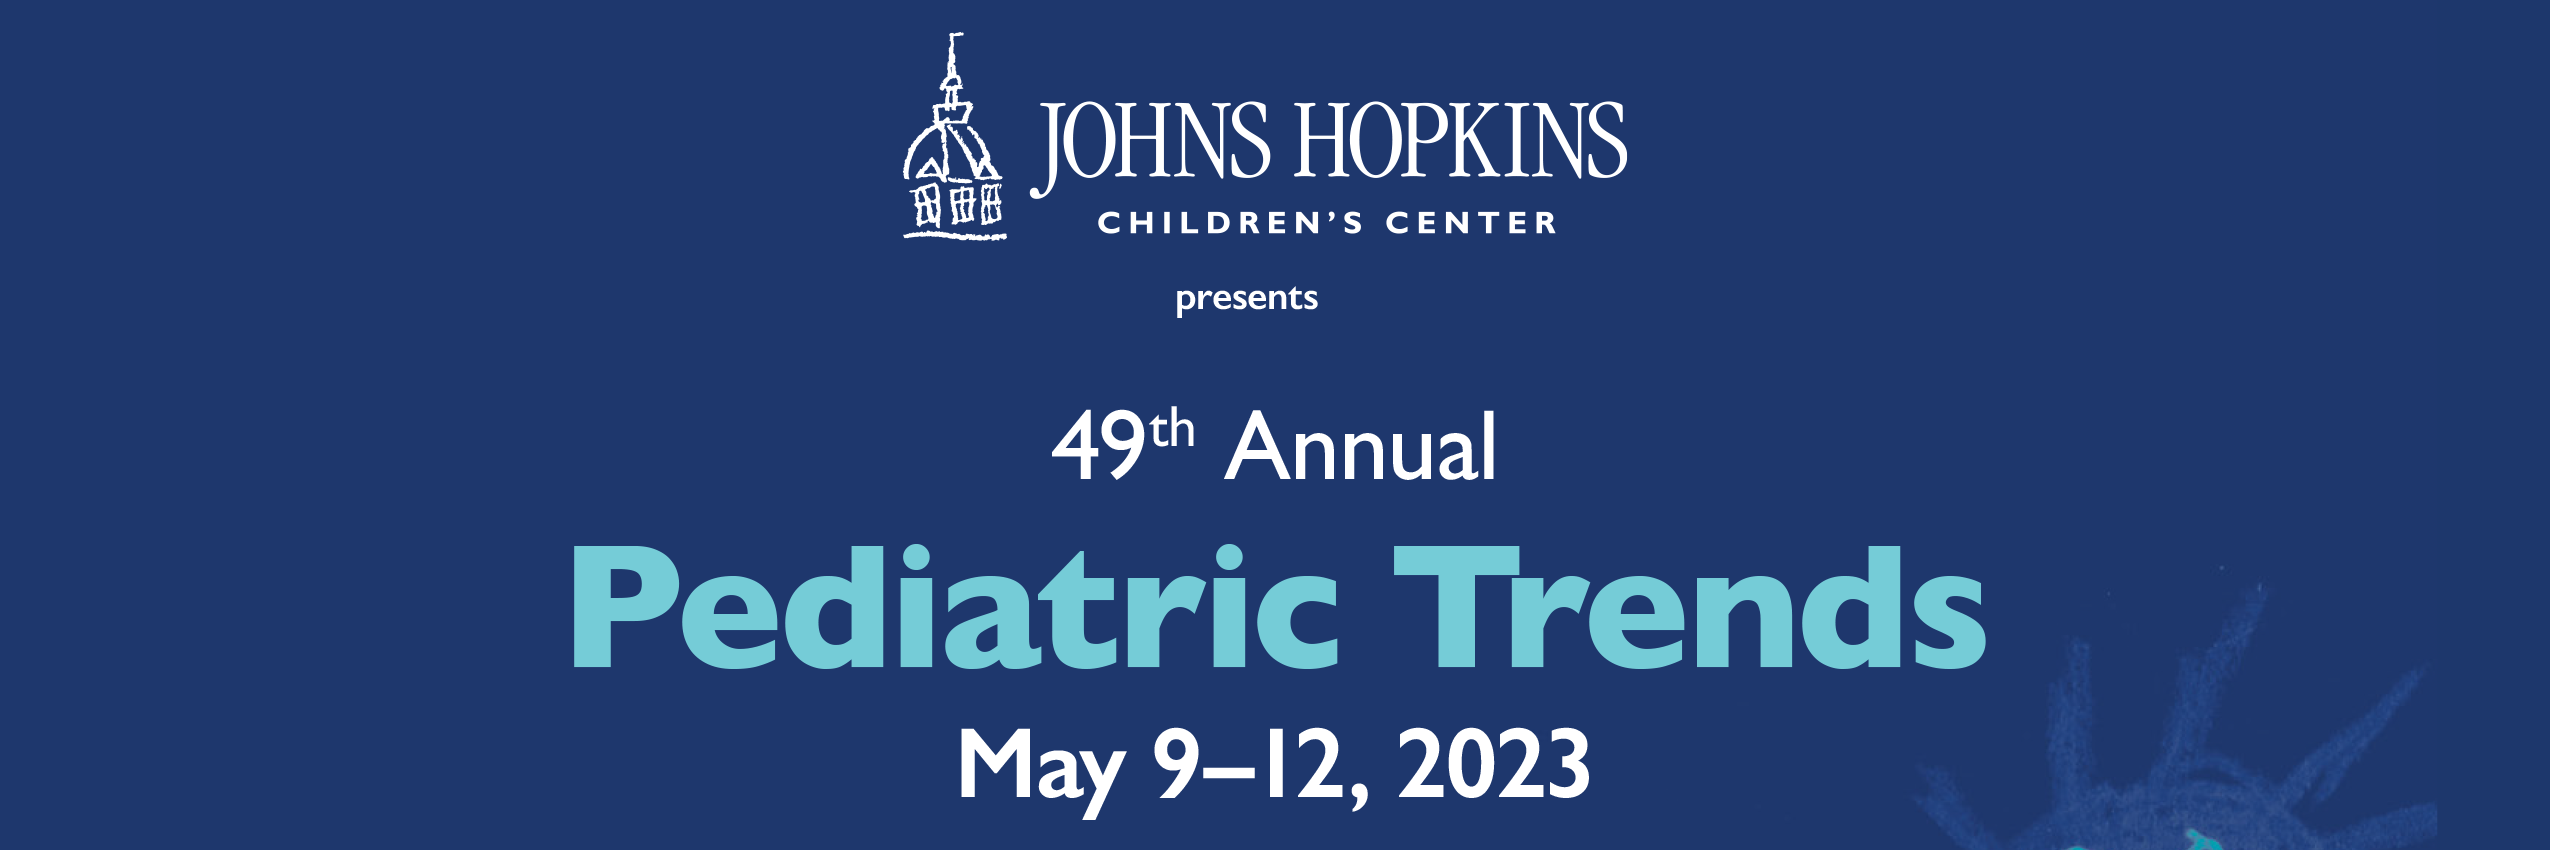 49th Annual Pediatric Trends Banner